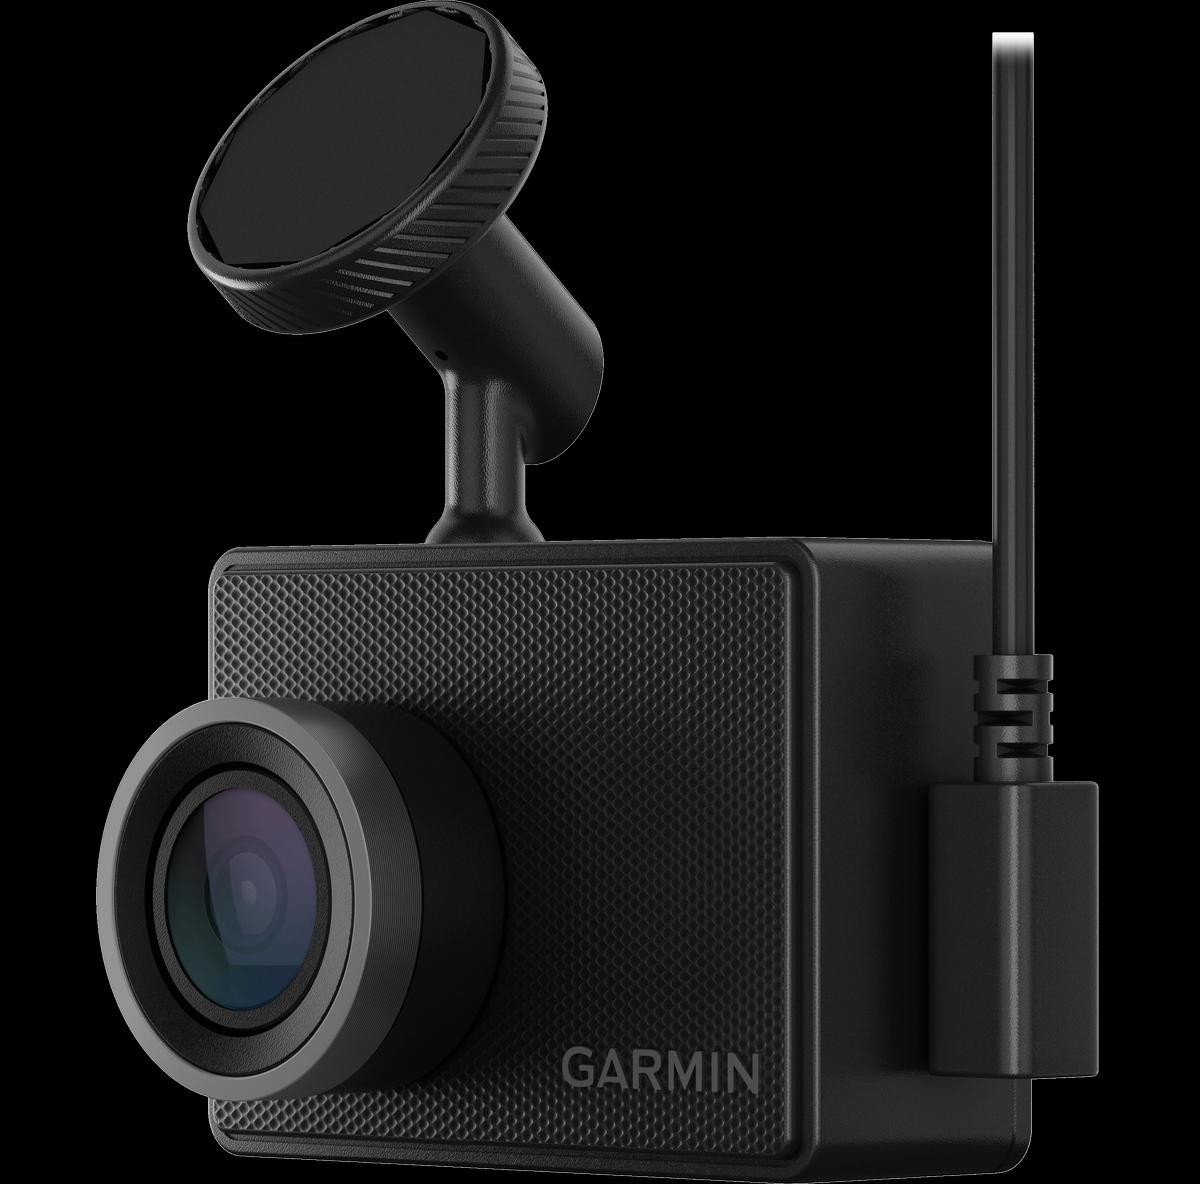 010-02505-01 GARMIN Dashcam 2 Pouces, 1080p HD, Angle de vue 140